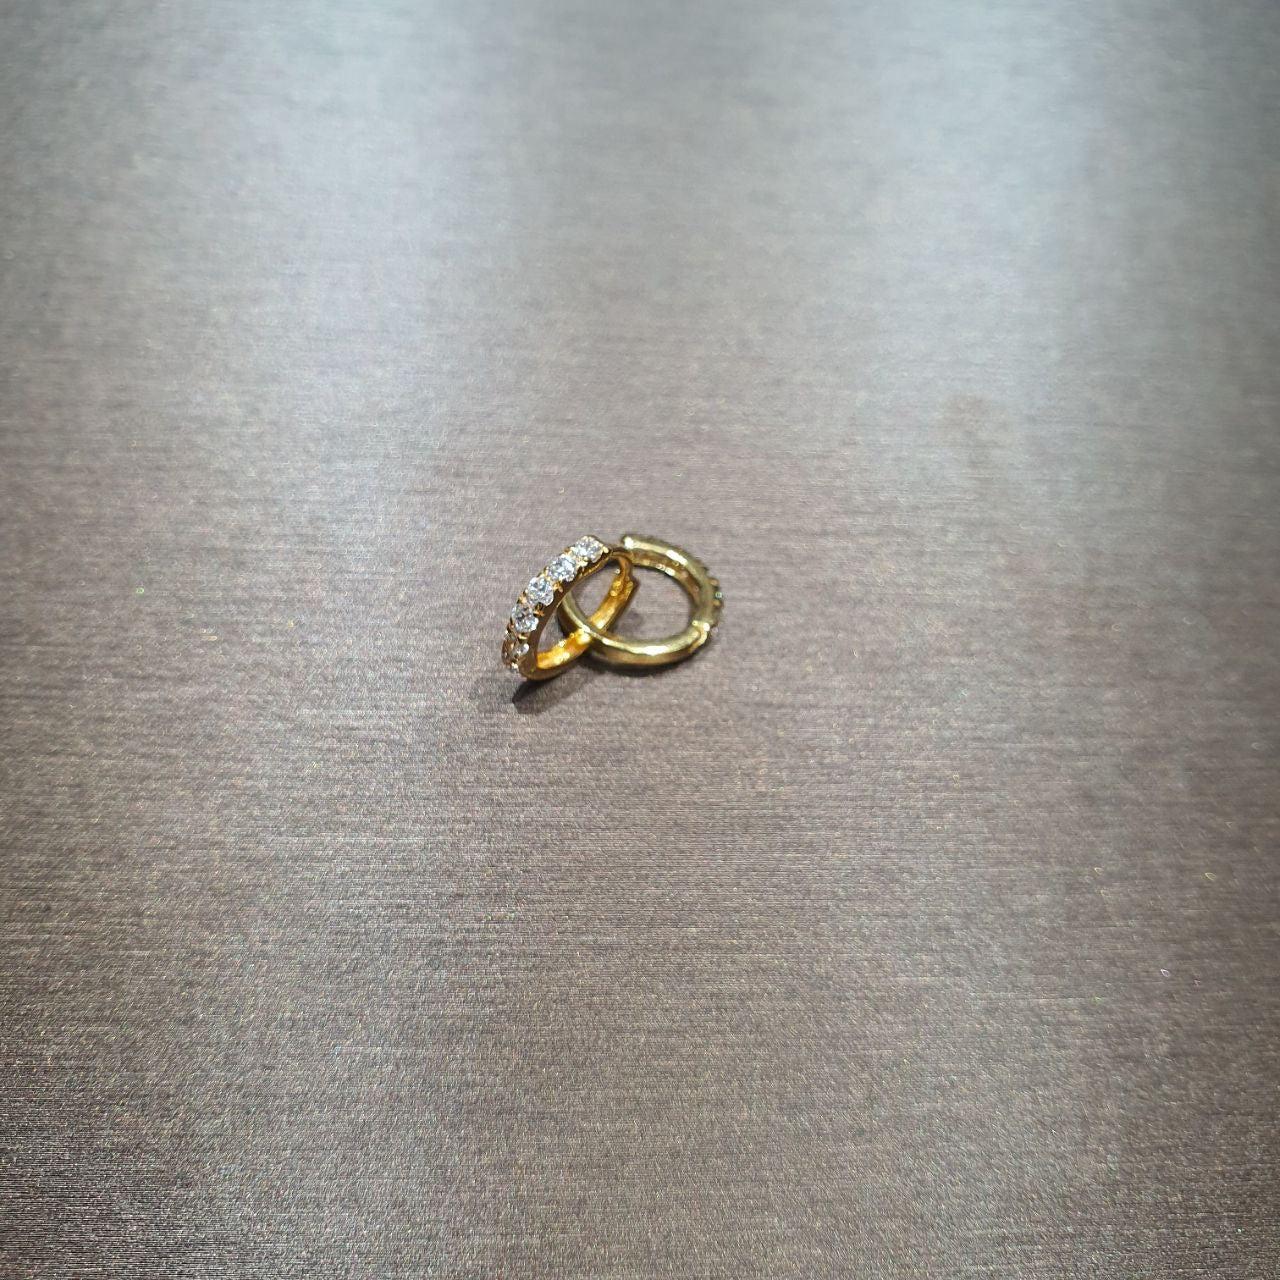 22k / 916 Gold Loop Crystal Earring-Earrings-Best Gold Shop